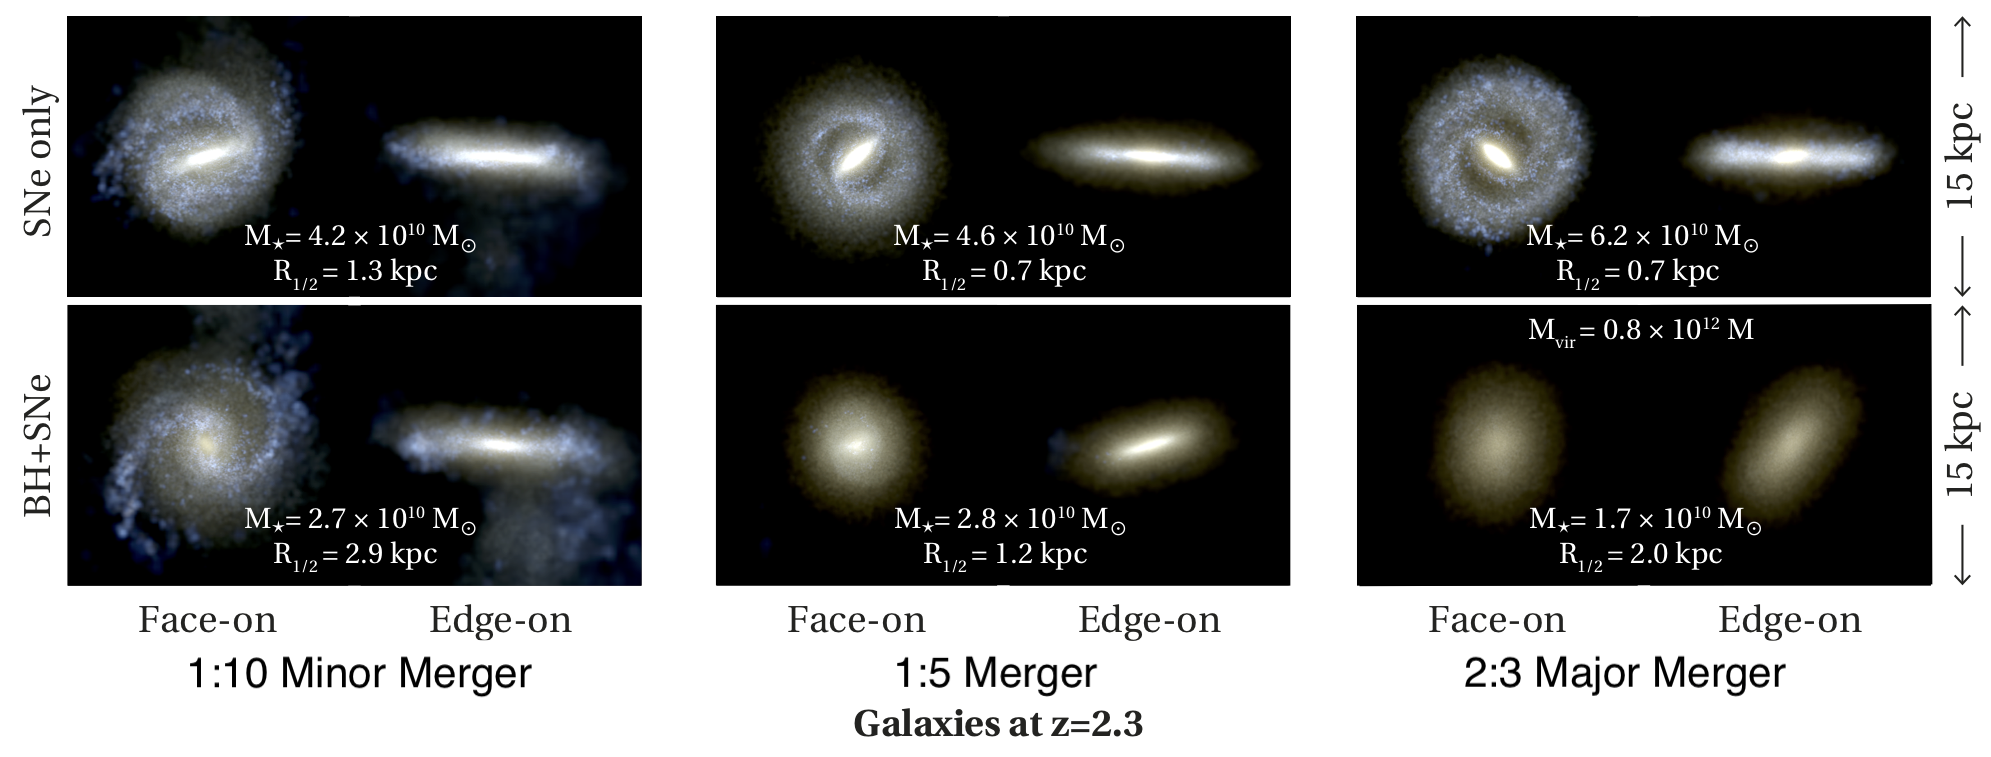 GM galaxies